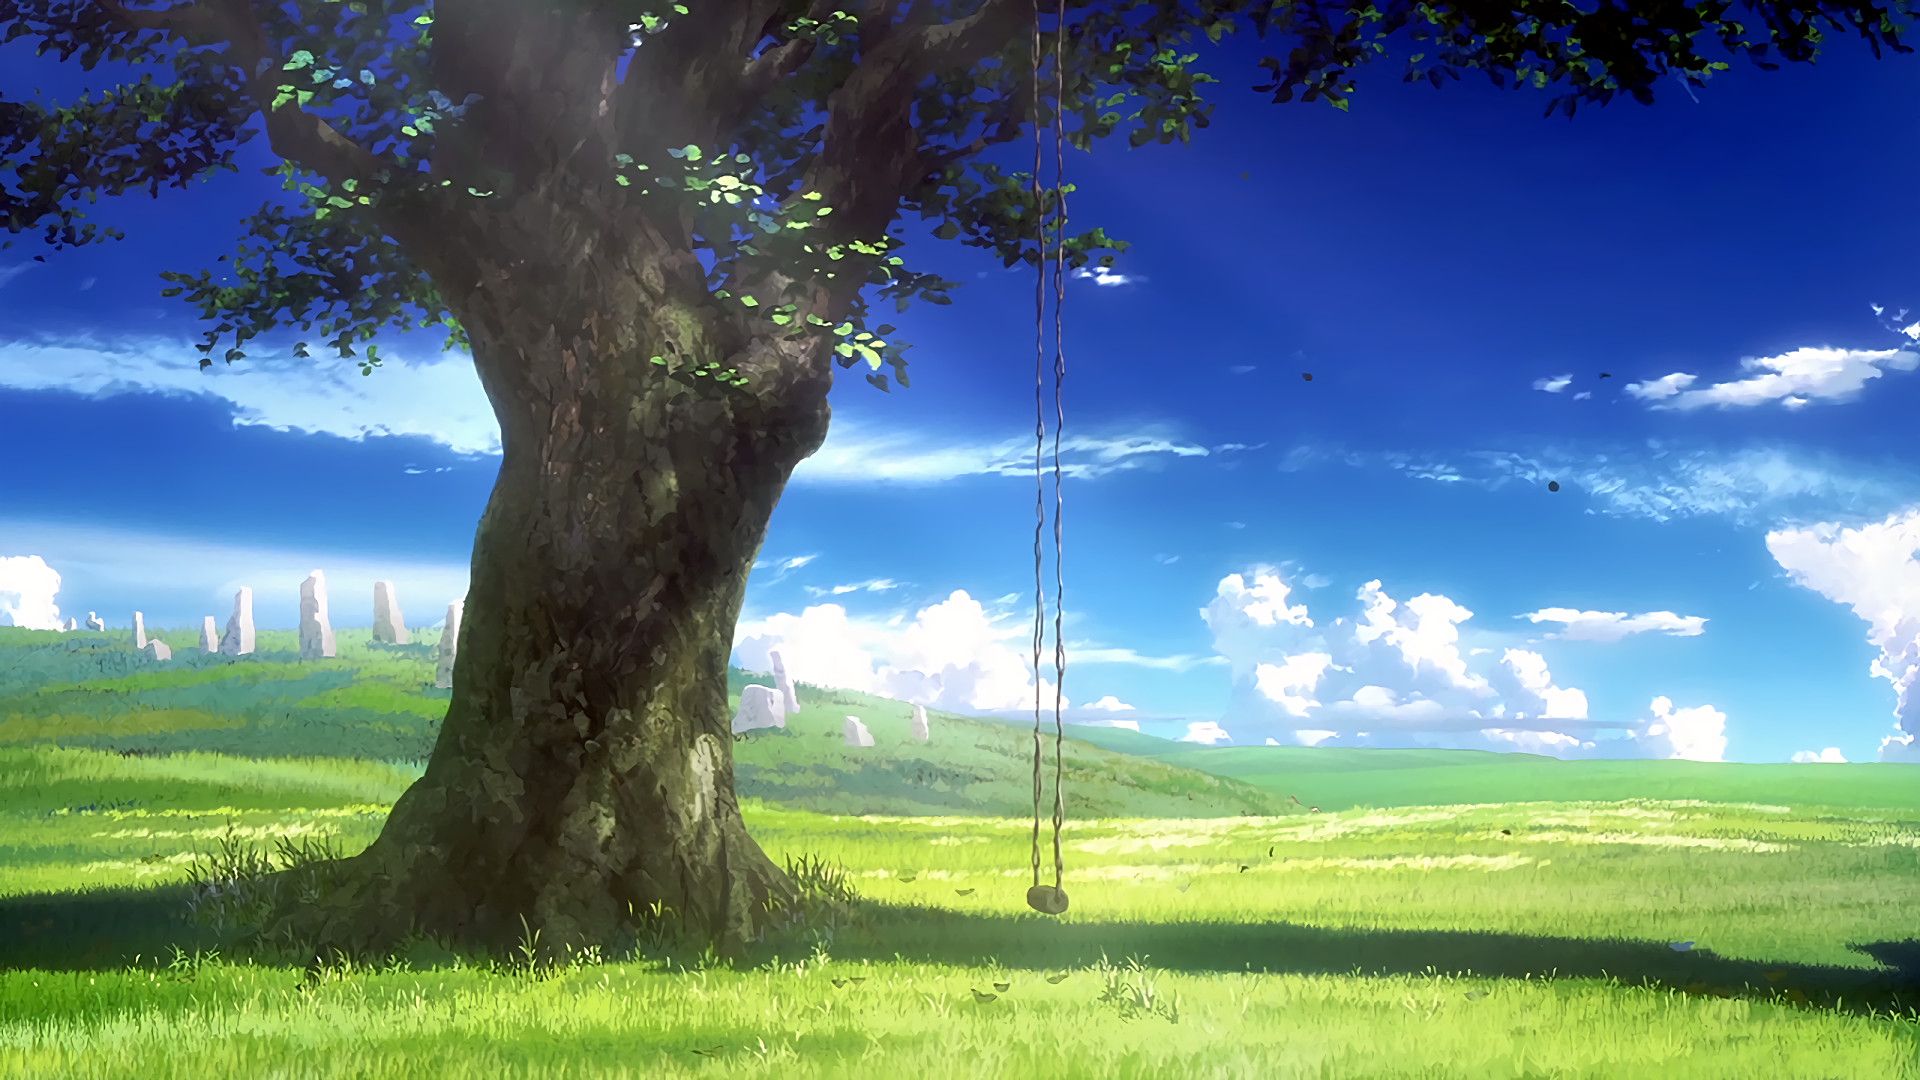 4K Anime Purple Evening Sky  Relaxing Live Wallpaper  1 Hour Screensaver   Infinite Loop   YouTube